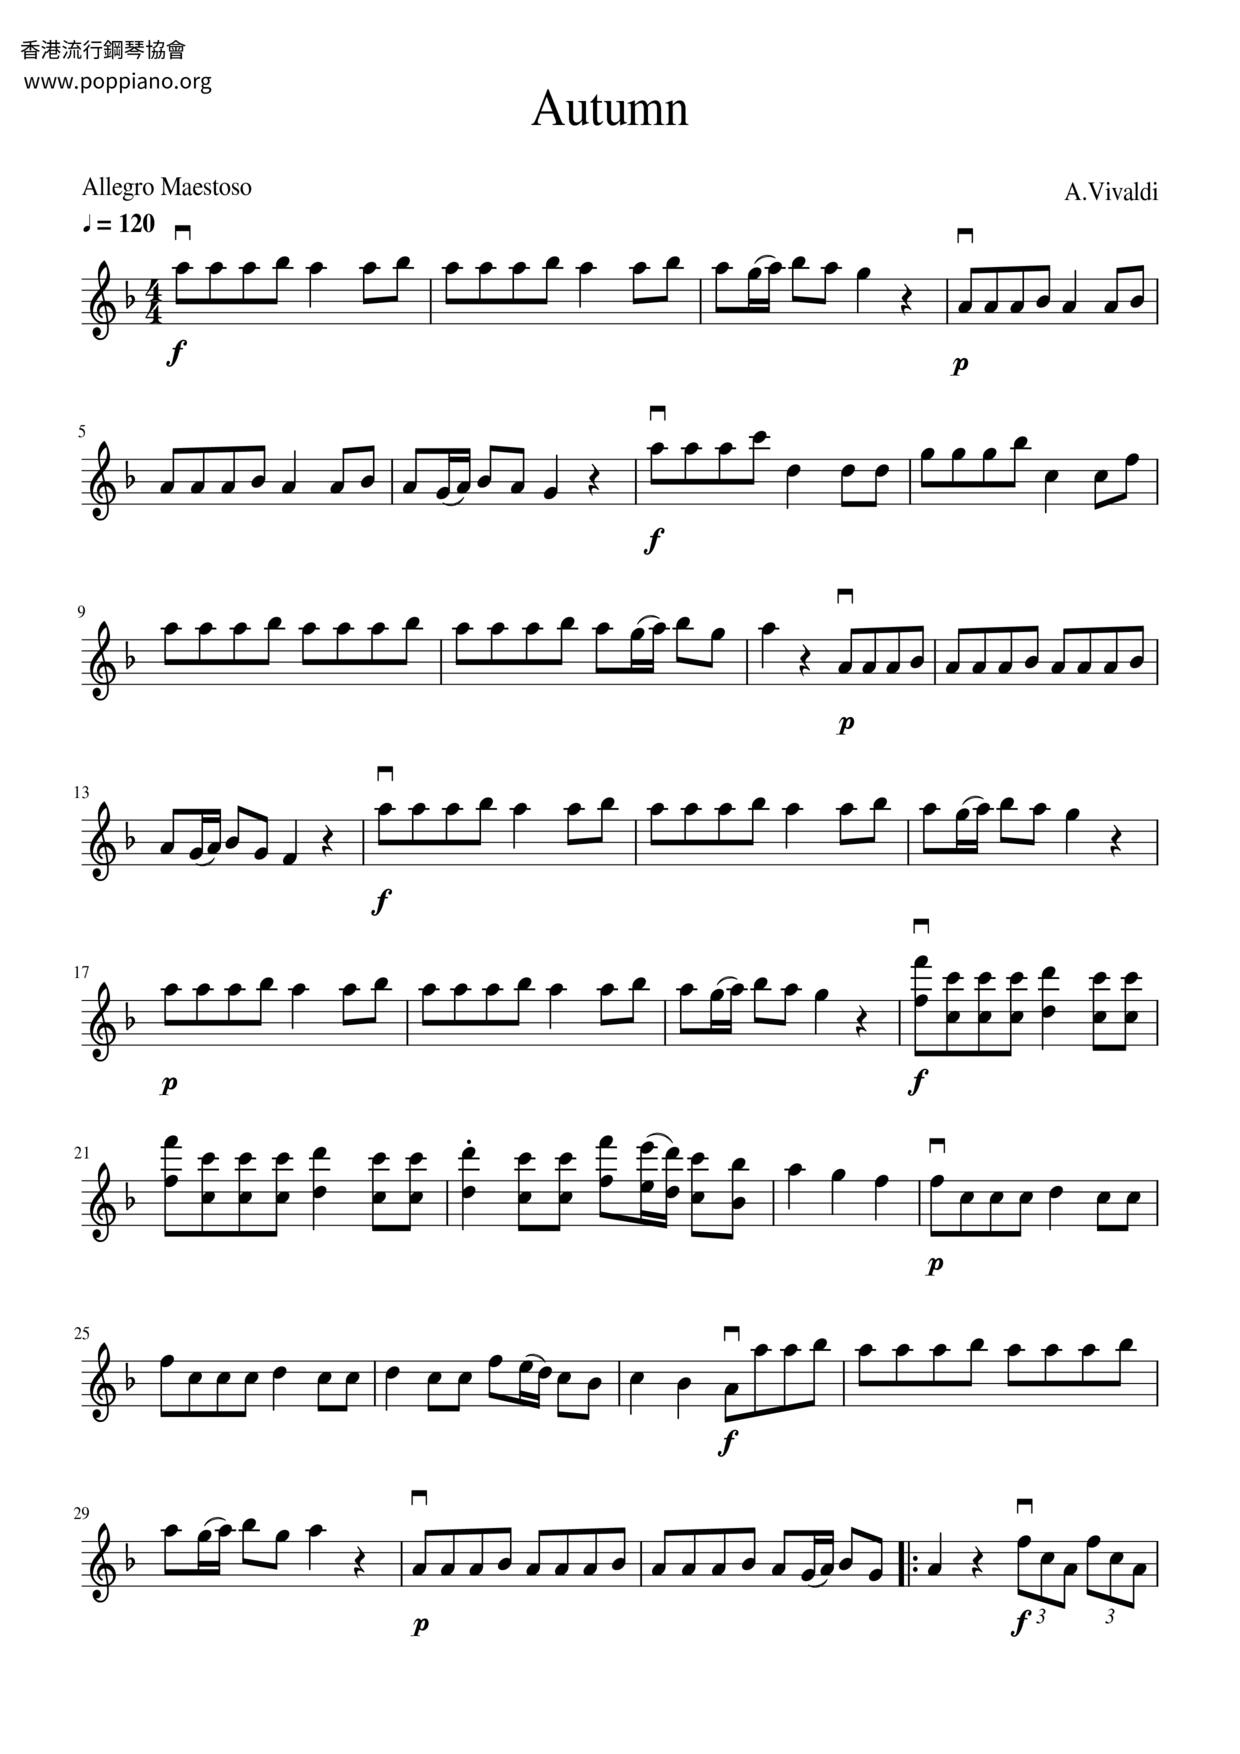 The Four Seasons - Autumn in F Major, RV. 293: III. Allegro Score